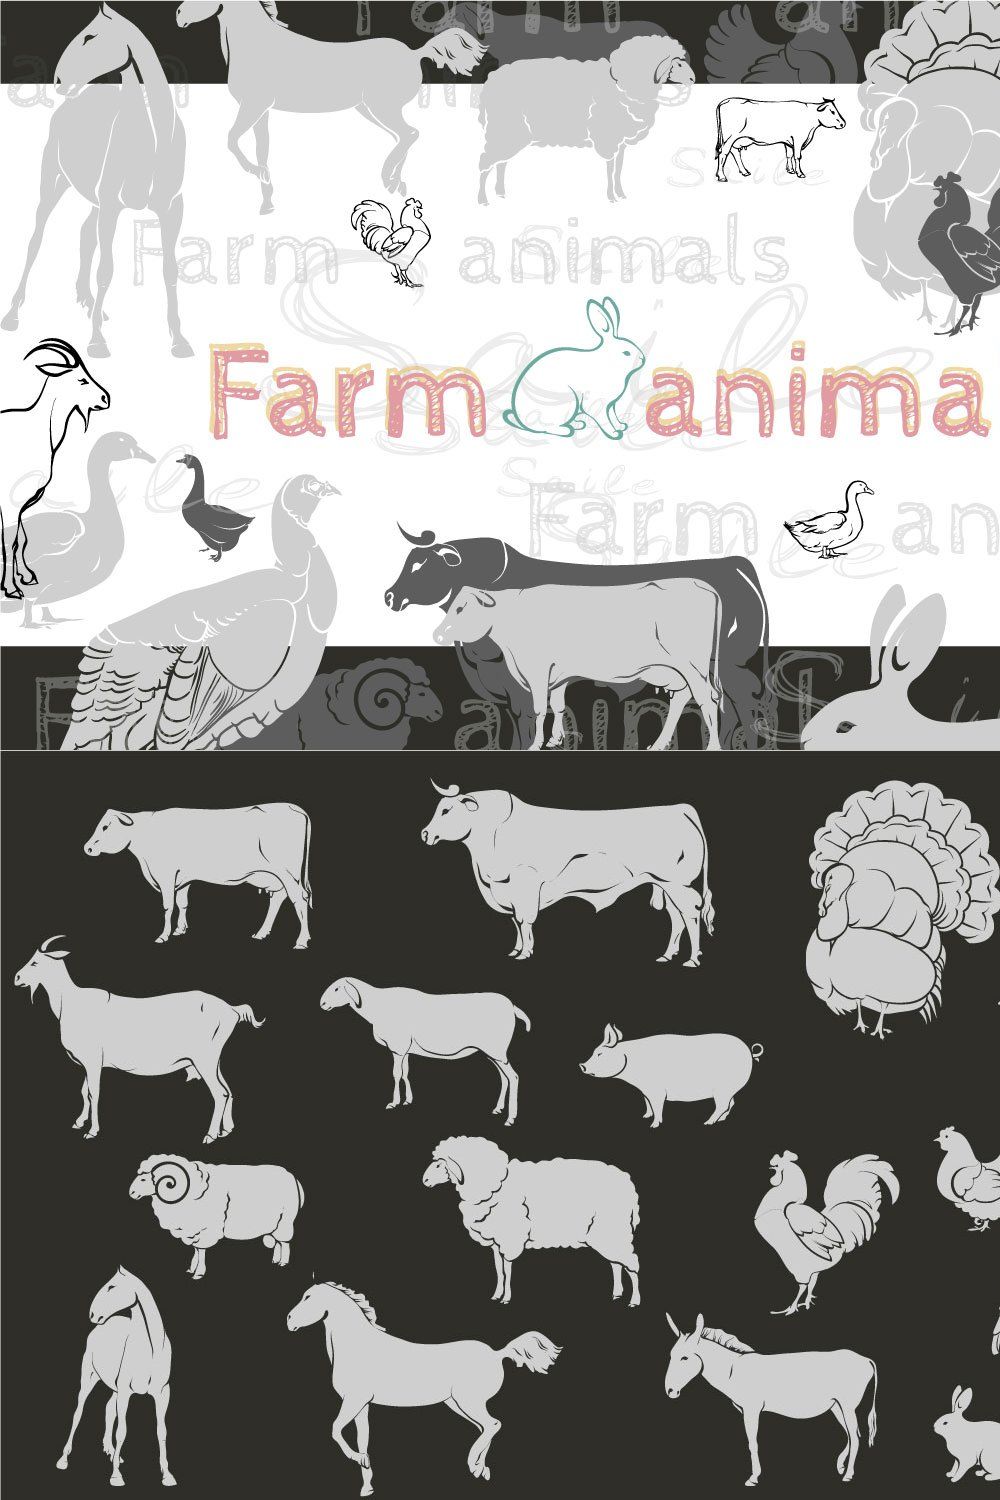 Farm animals pinterest preview image.